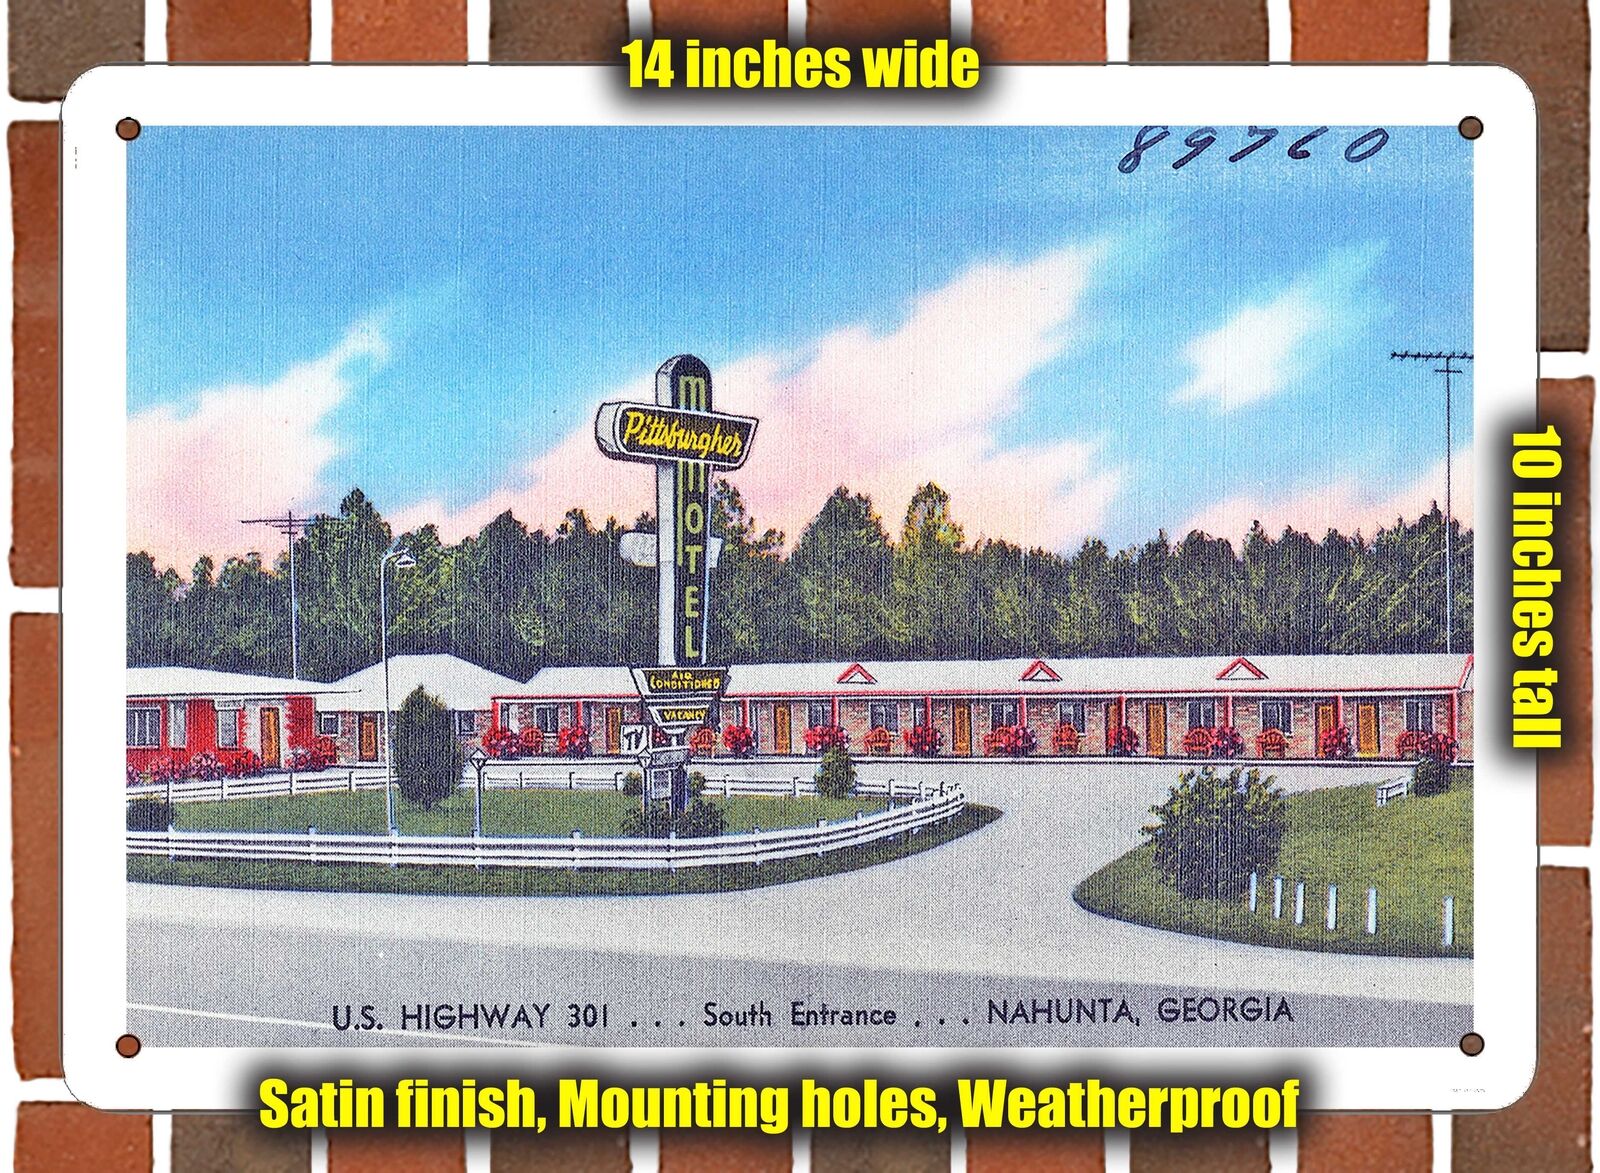 METAL SIGN - Georgia Postcard - Pittsburgher Motel, U.S. Highway 301 . . . Sout